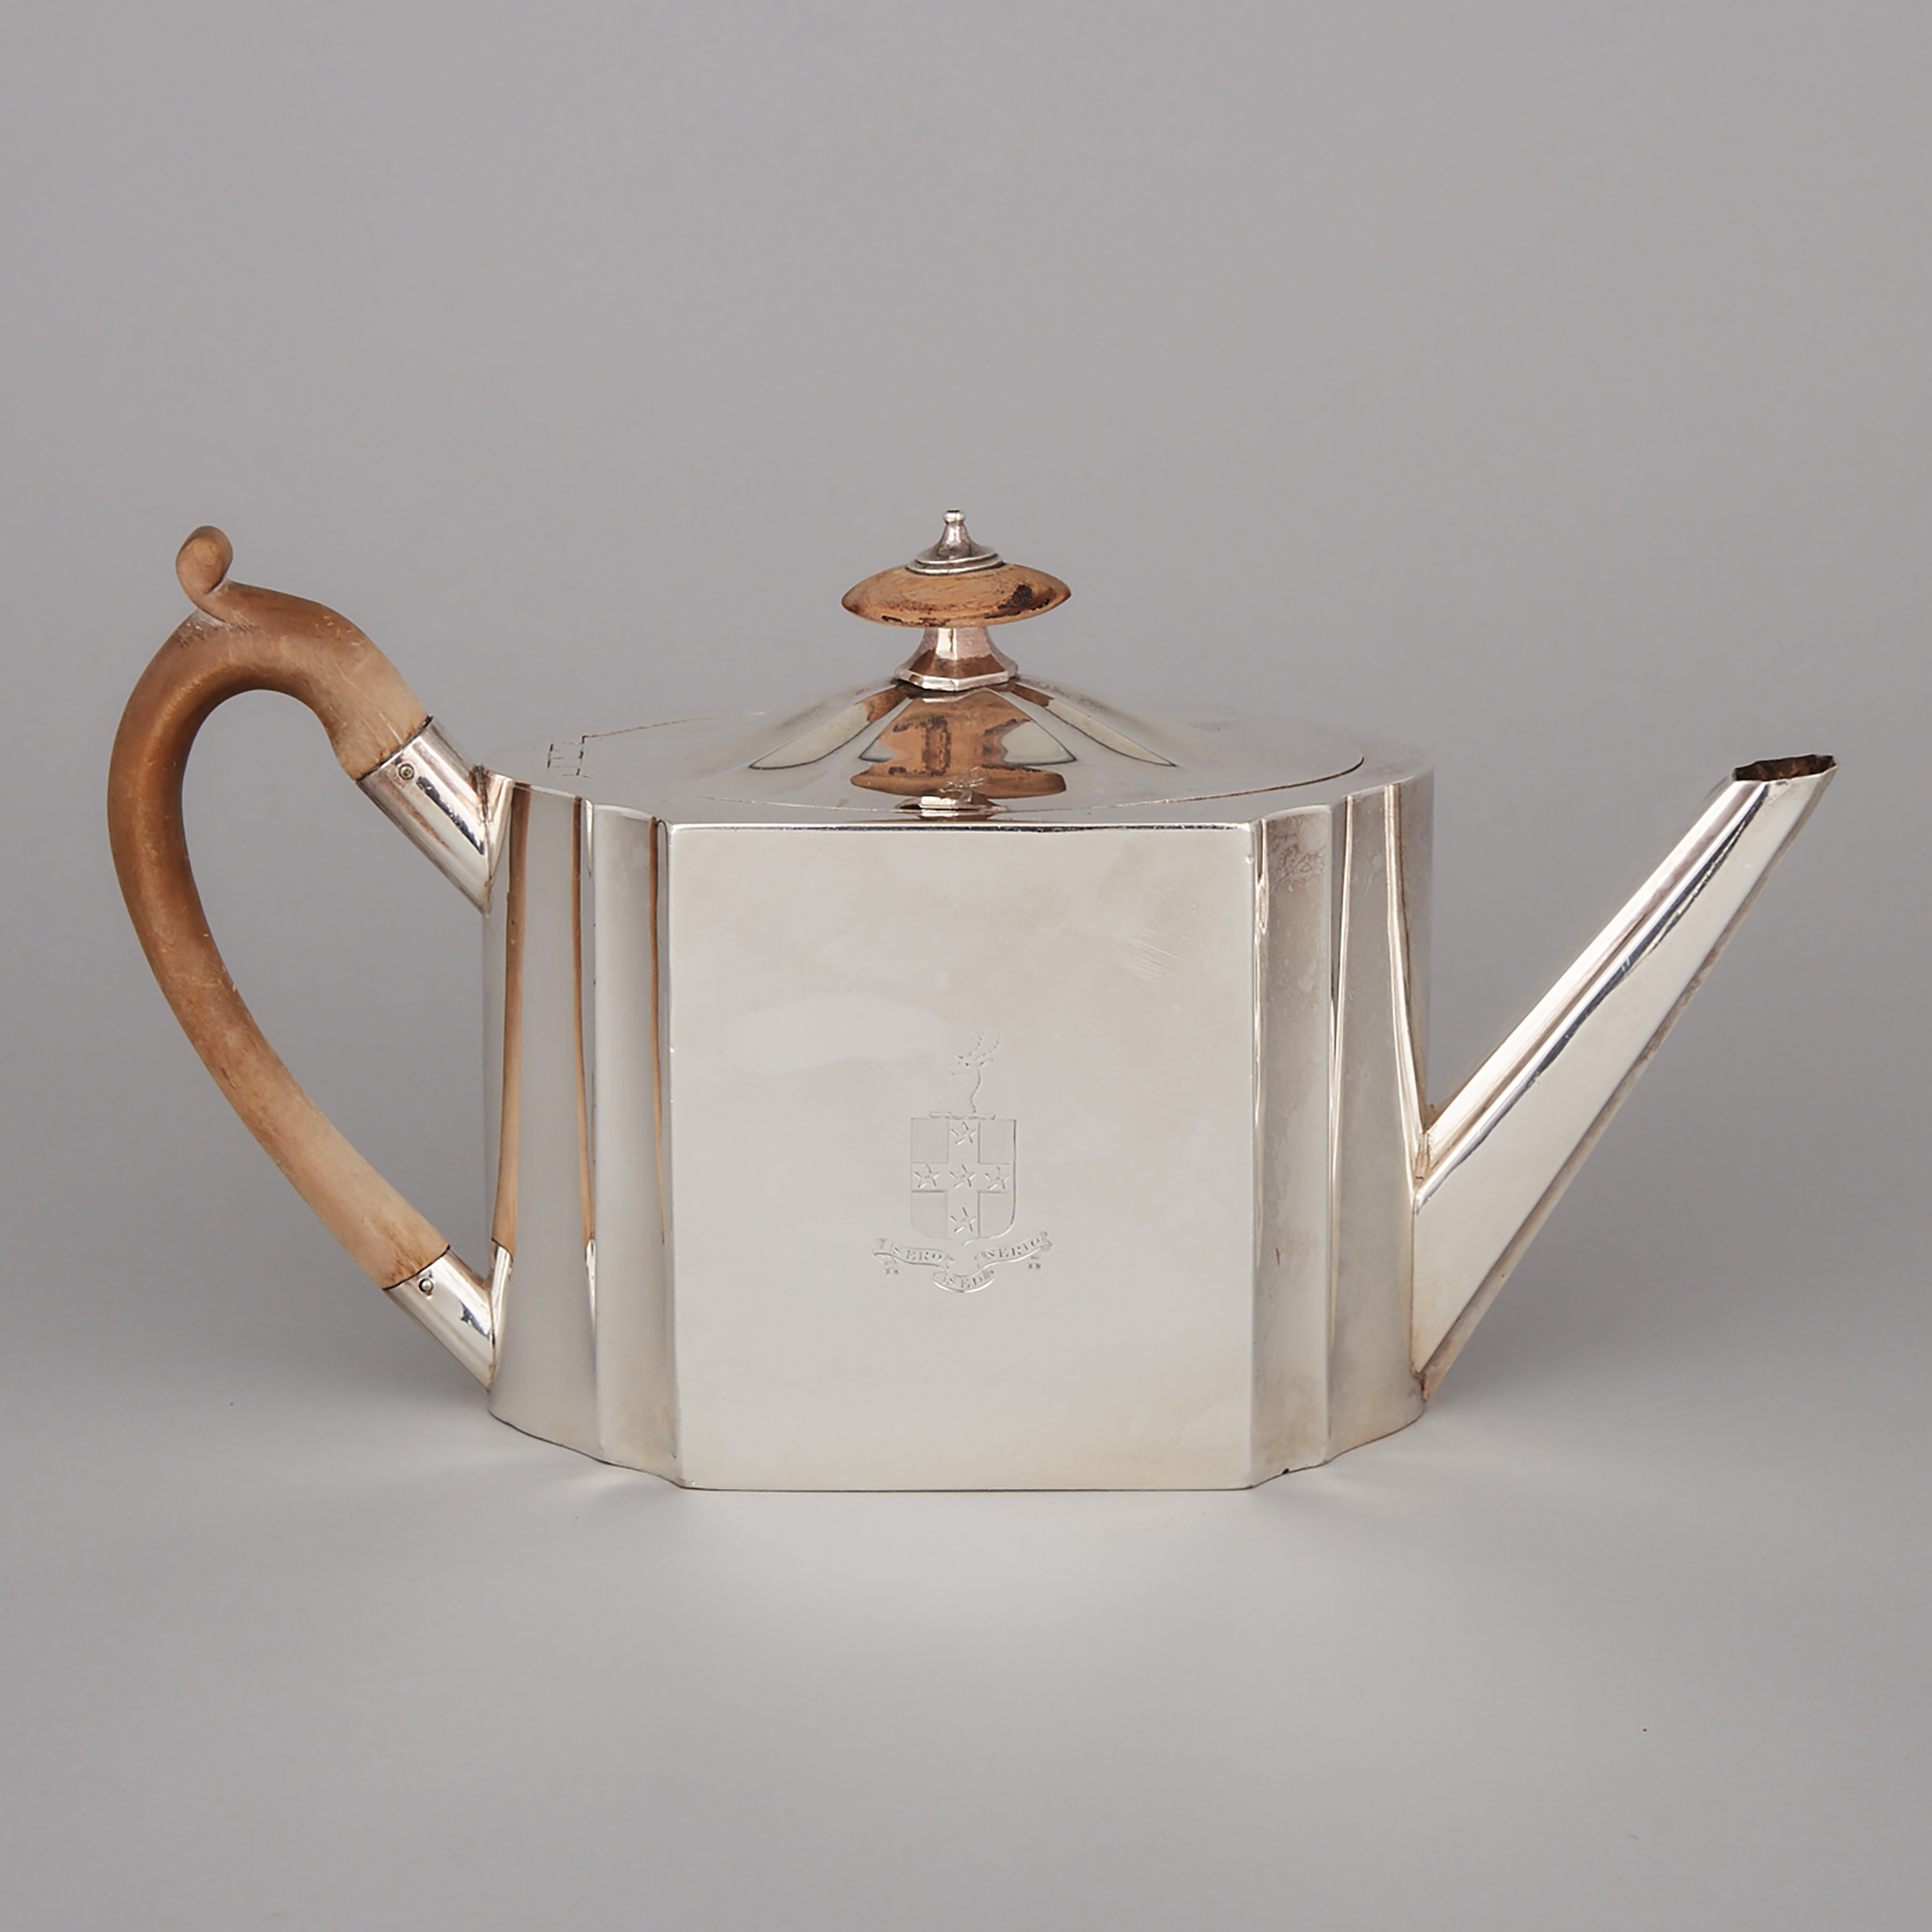 George III Silver Teapot, Robert Sharp, London, 1793